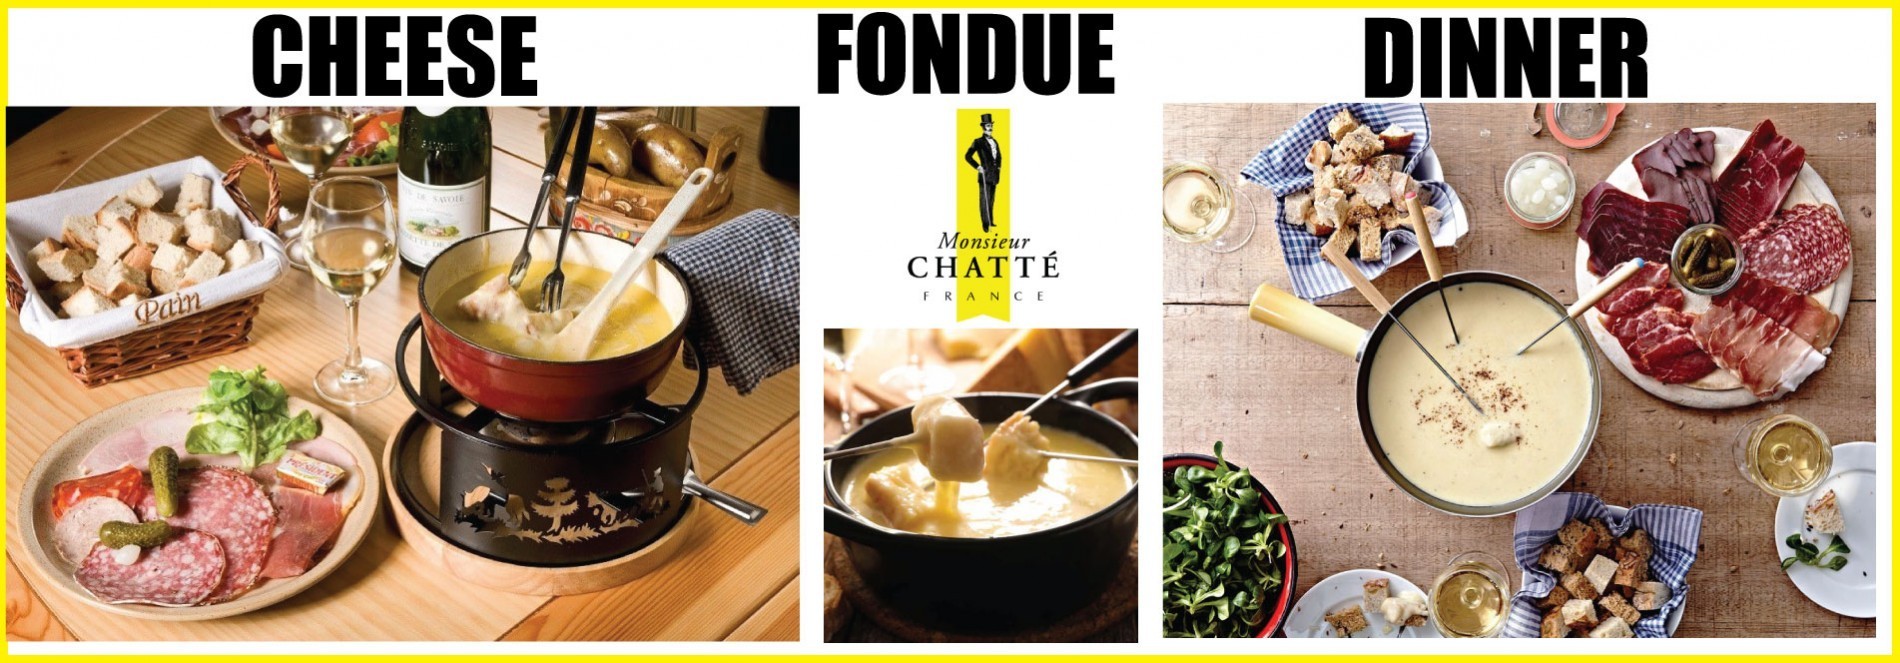 Cheese fondue event